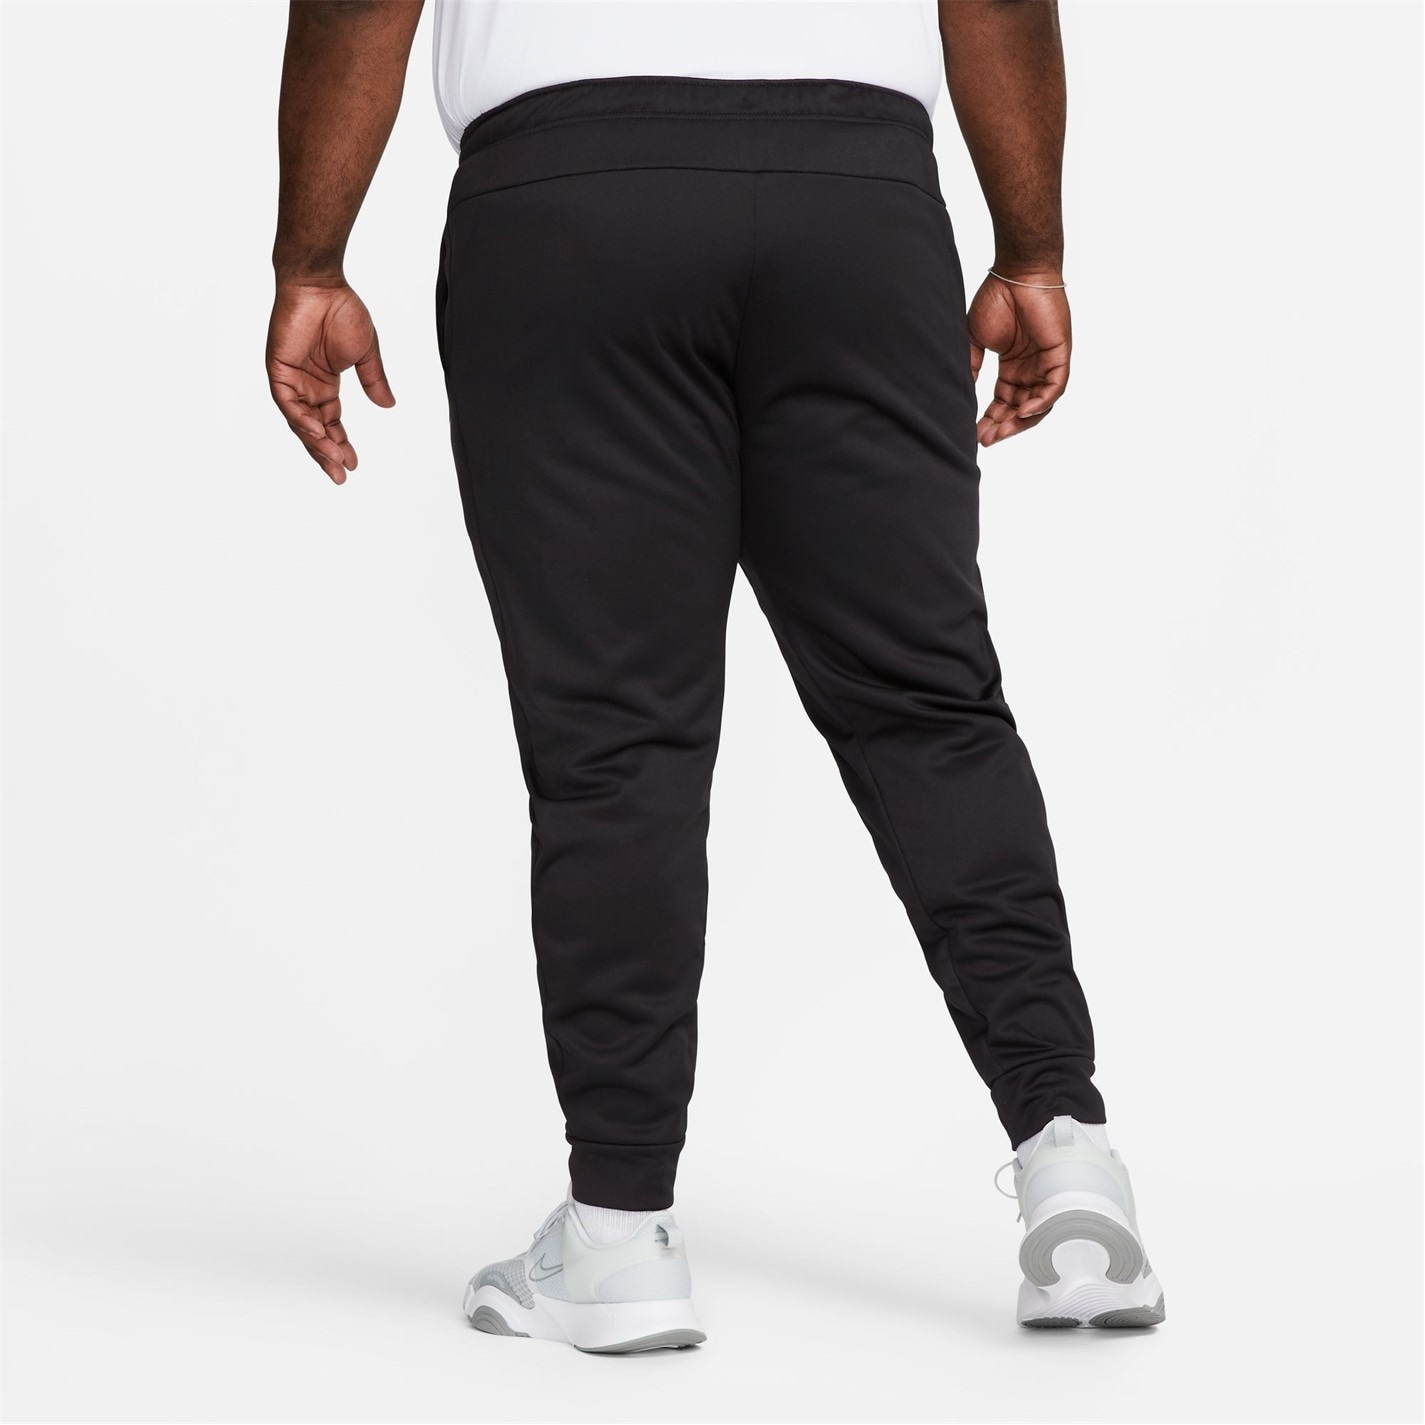 Pantaloni antrenament sport Nike Therma-FIT conici pentru Barbati negru alb